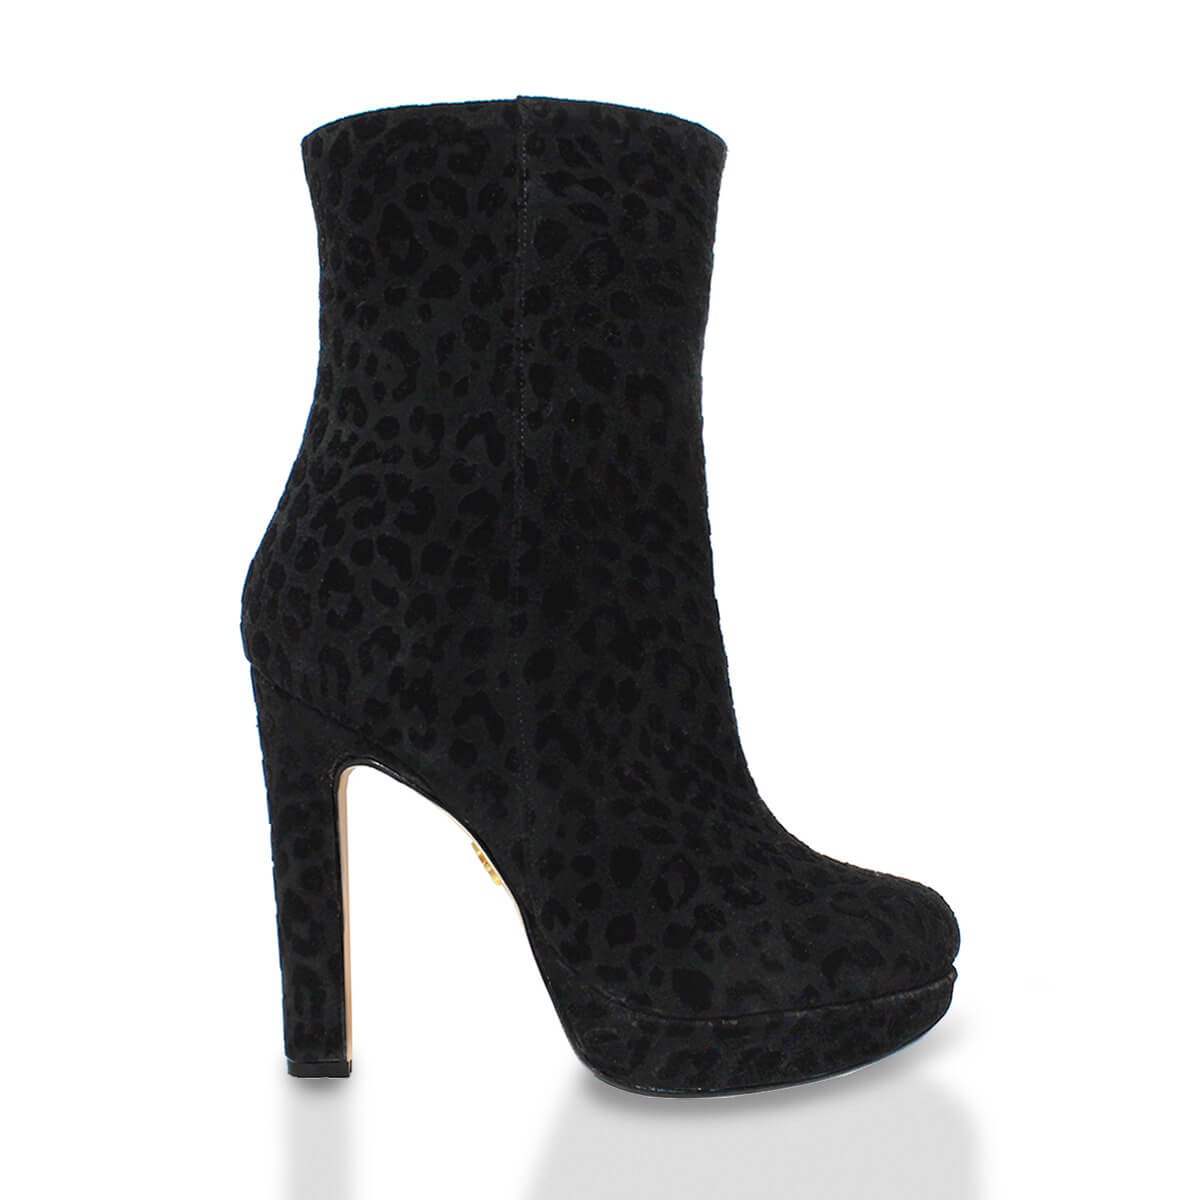 ALIX 120 - Black Print Regina Romero High Heel Platform Ankle Boot Shoe for Women in Leather